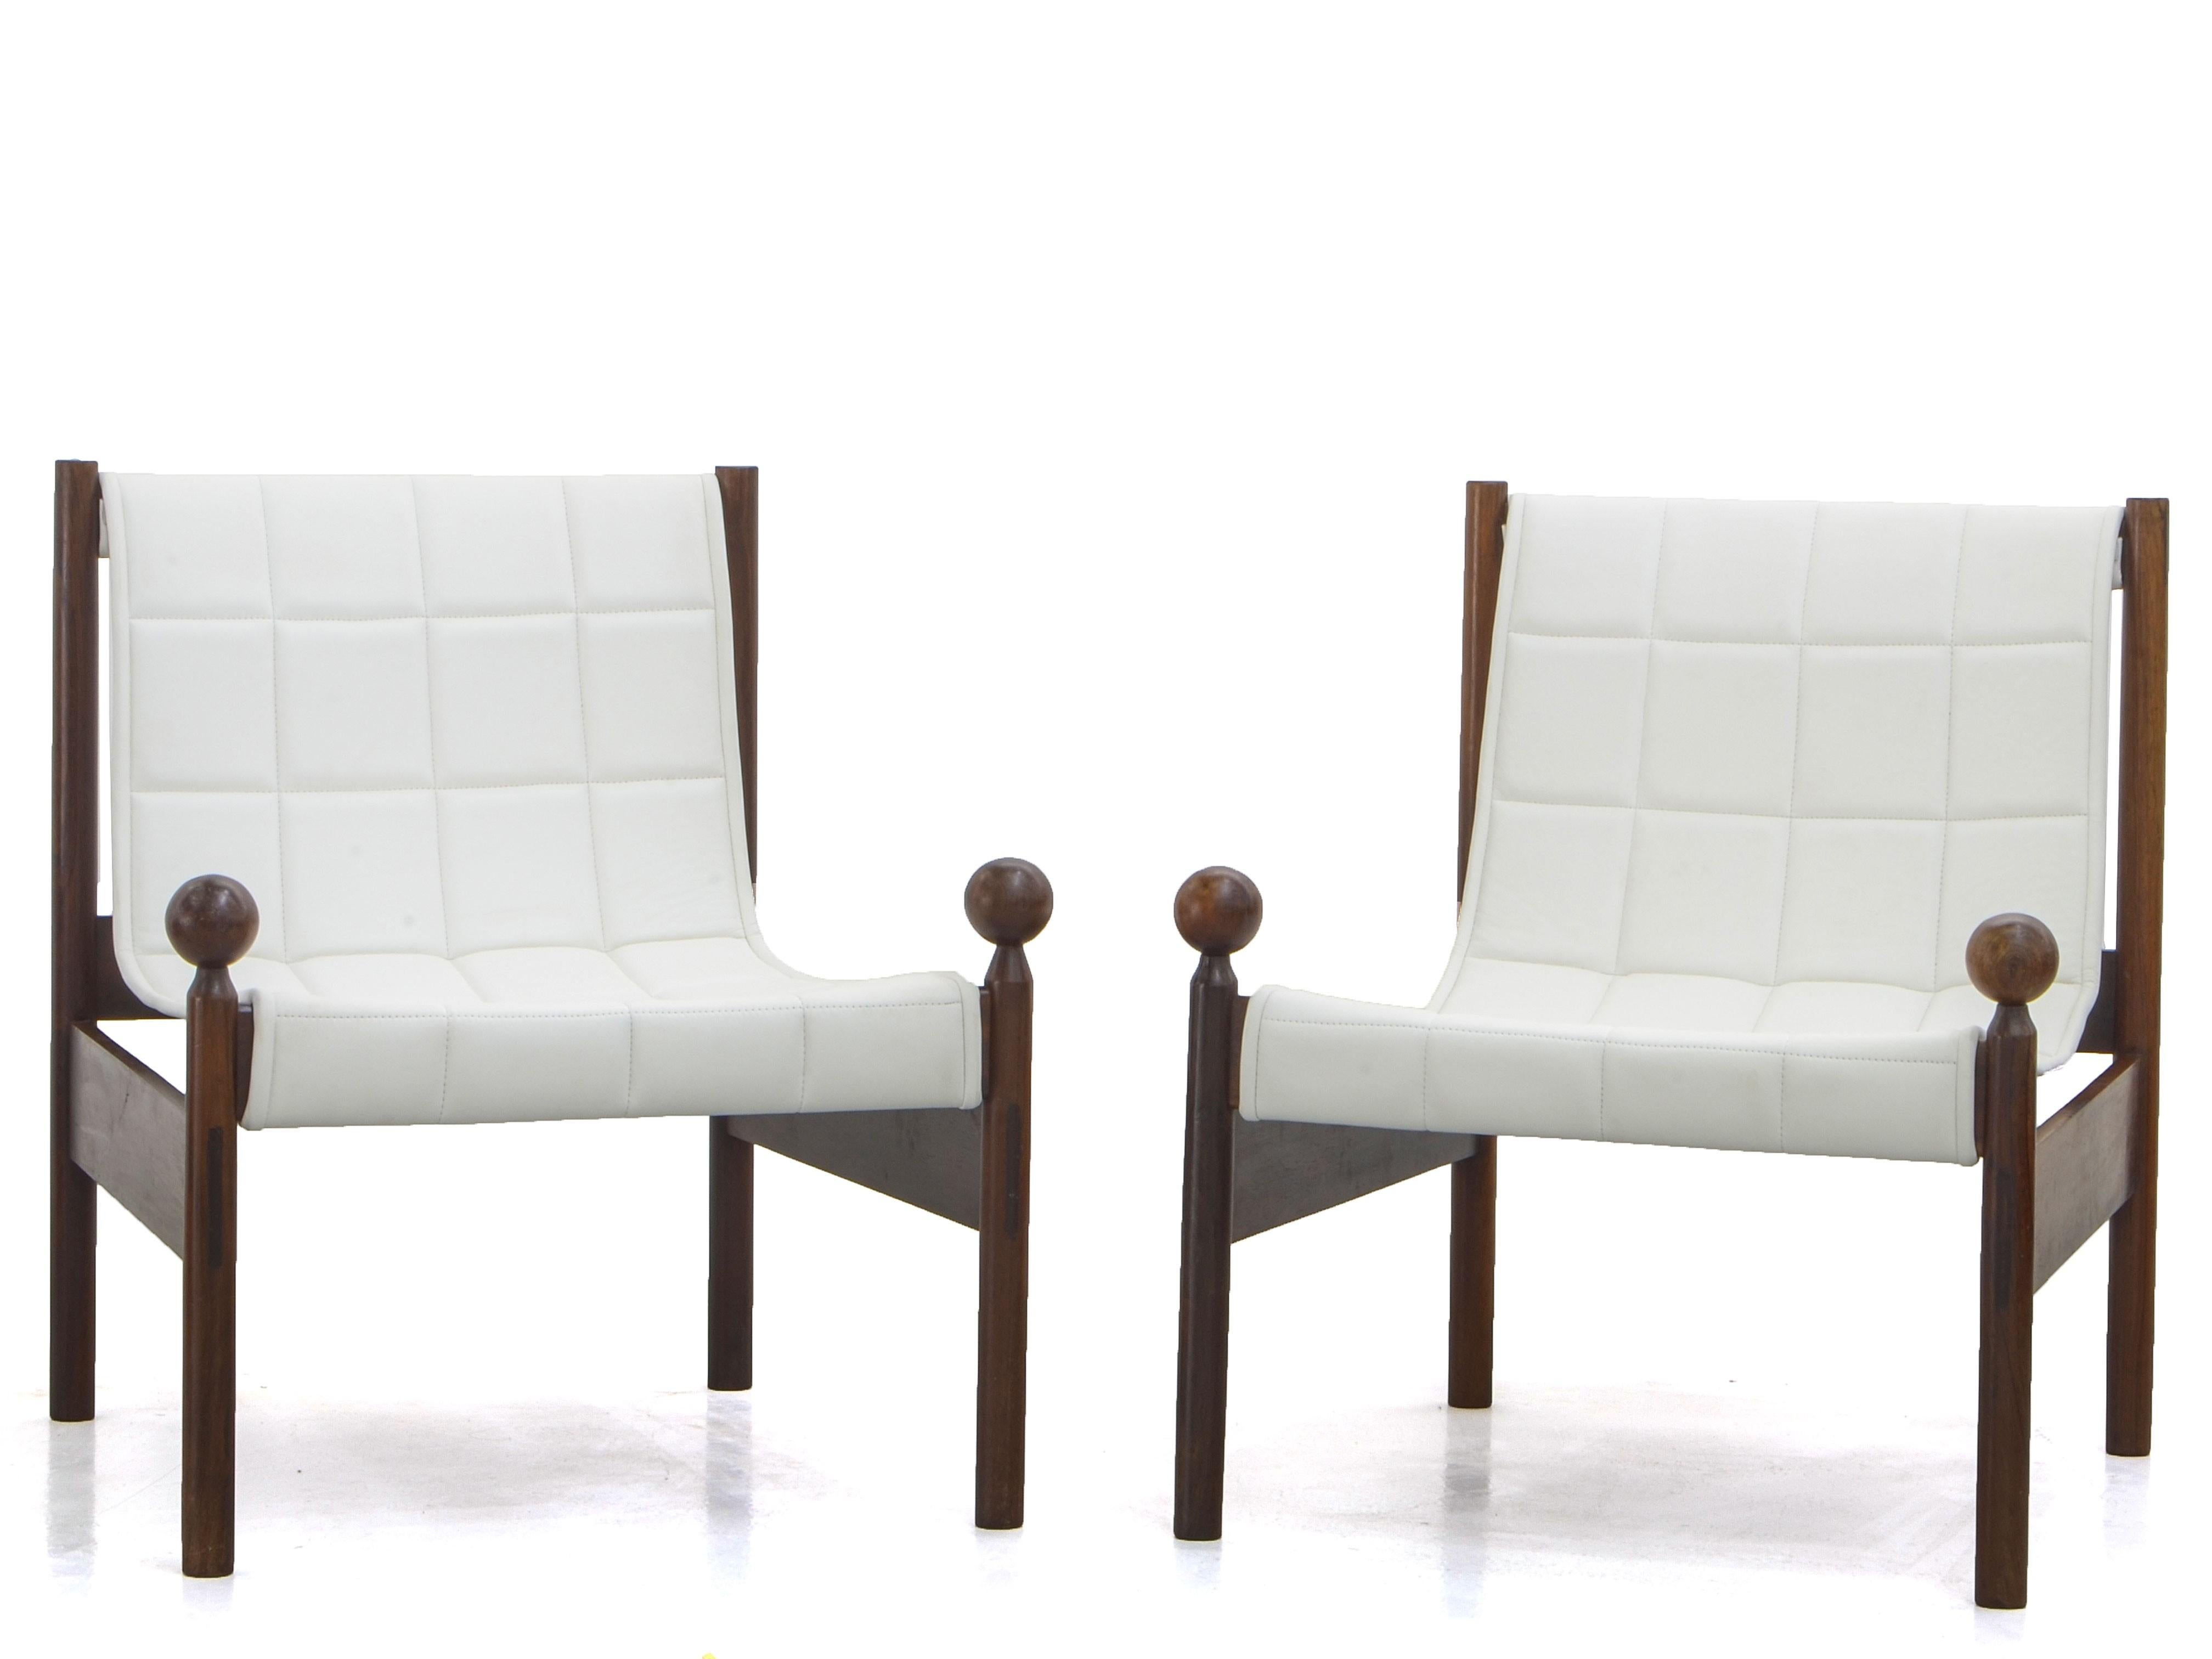 20th Century Ouro Preto Lounge Chairs, Jorge Zalszupin, Brazilian Midcentury